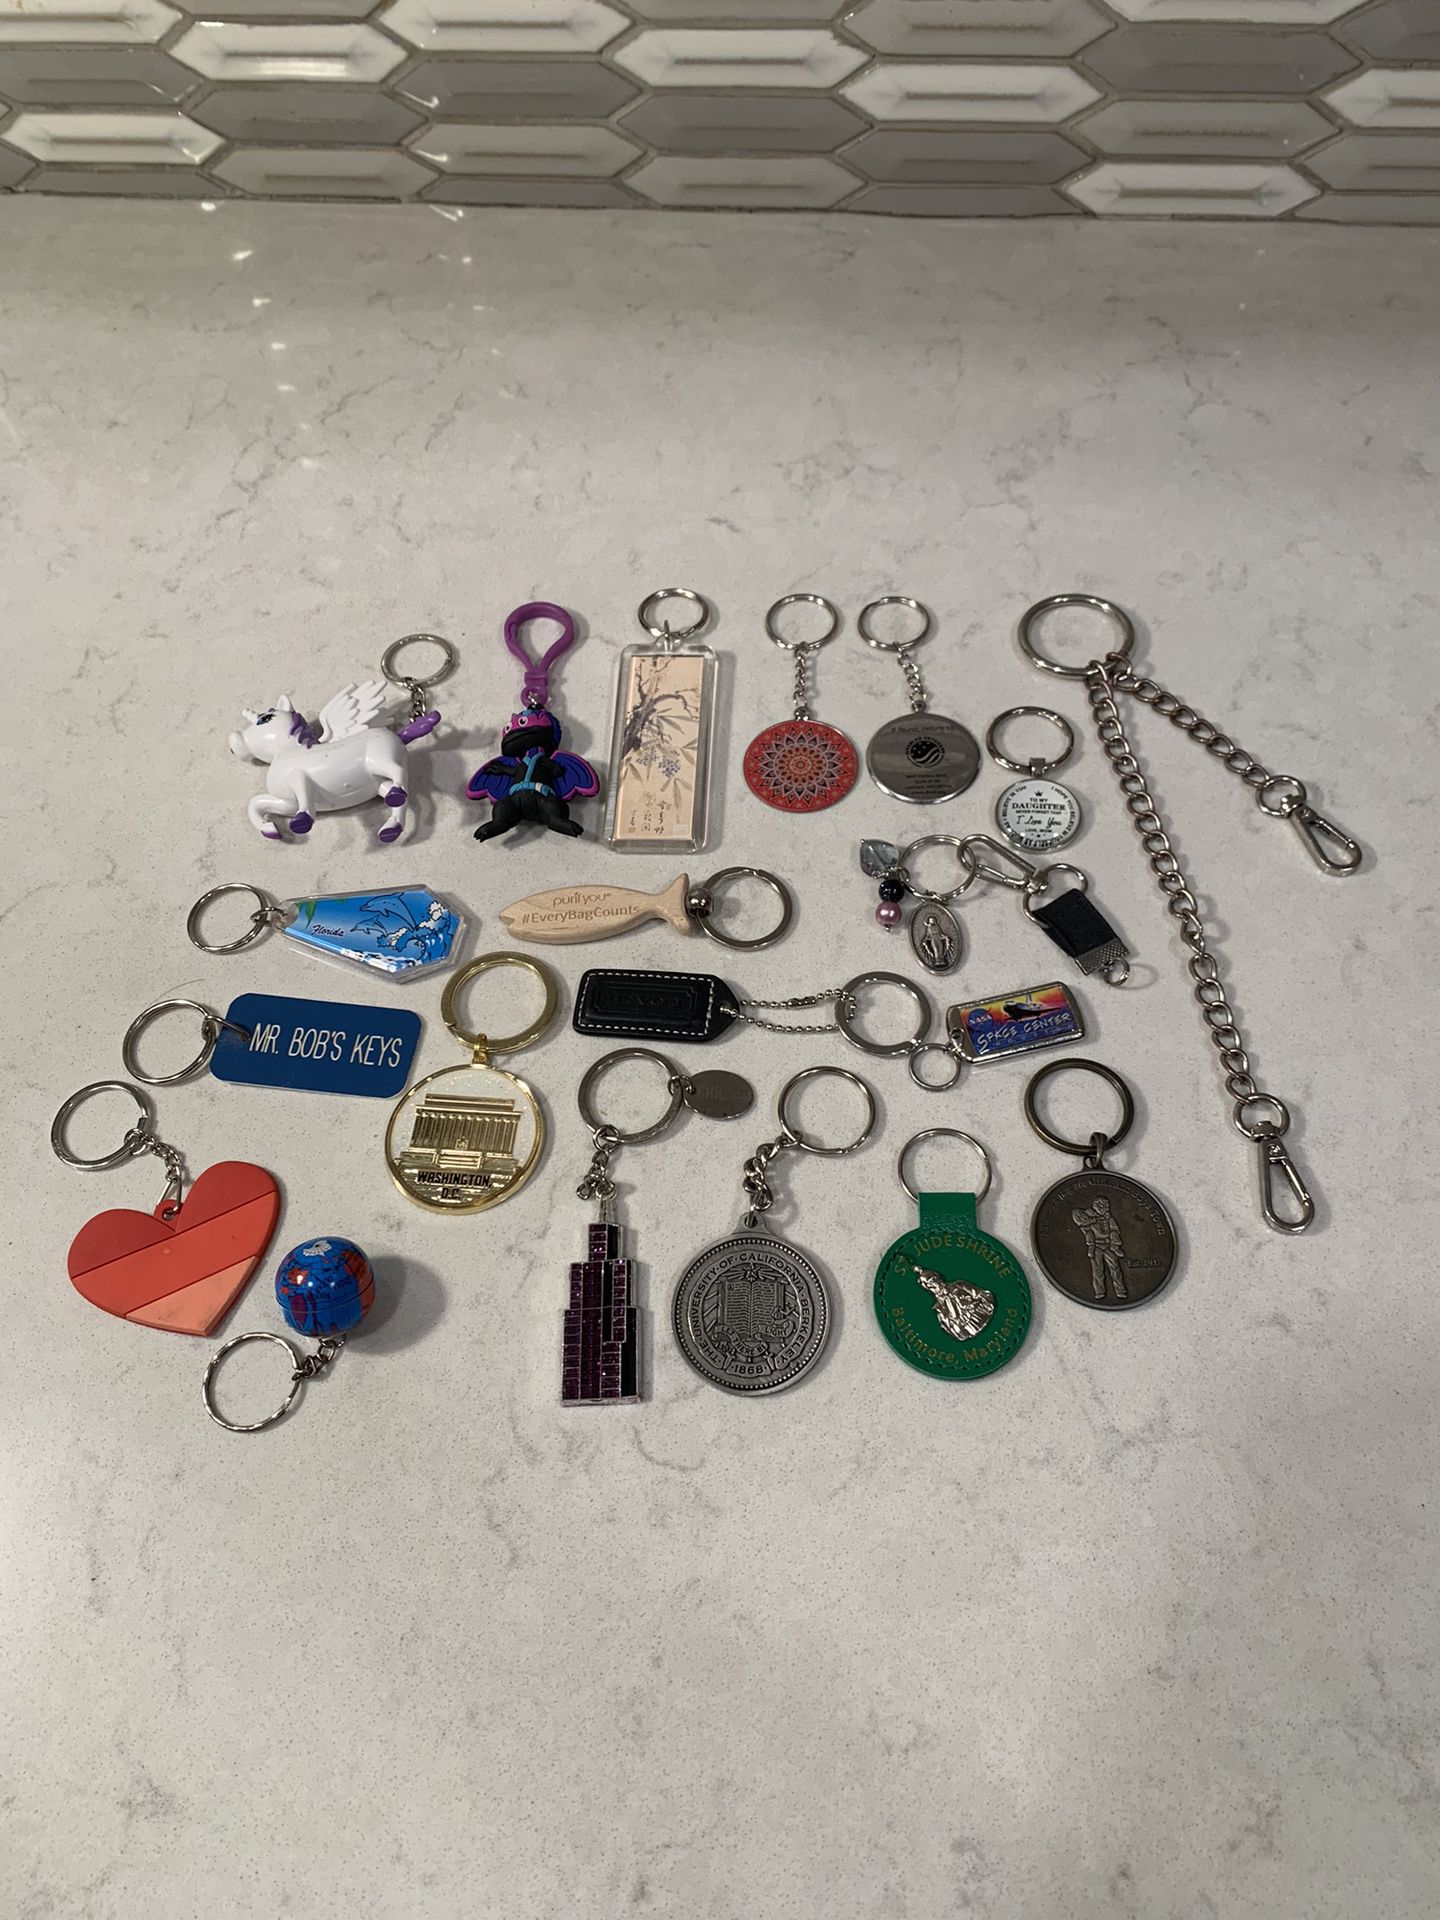 Random Keychain Lot Of 20